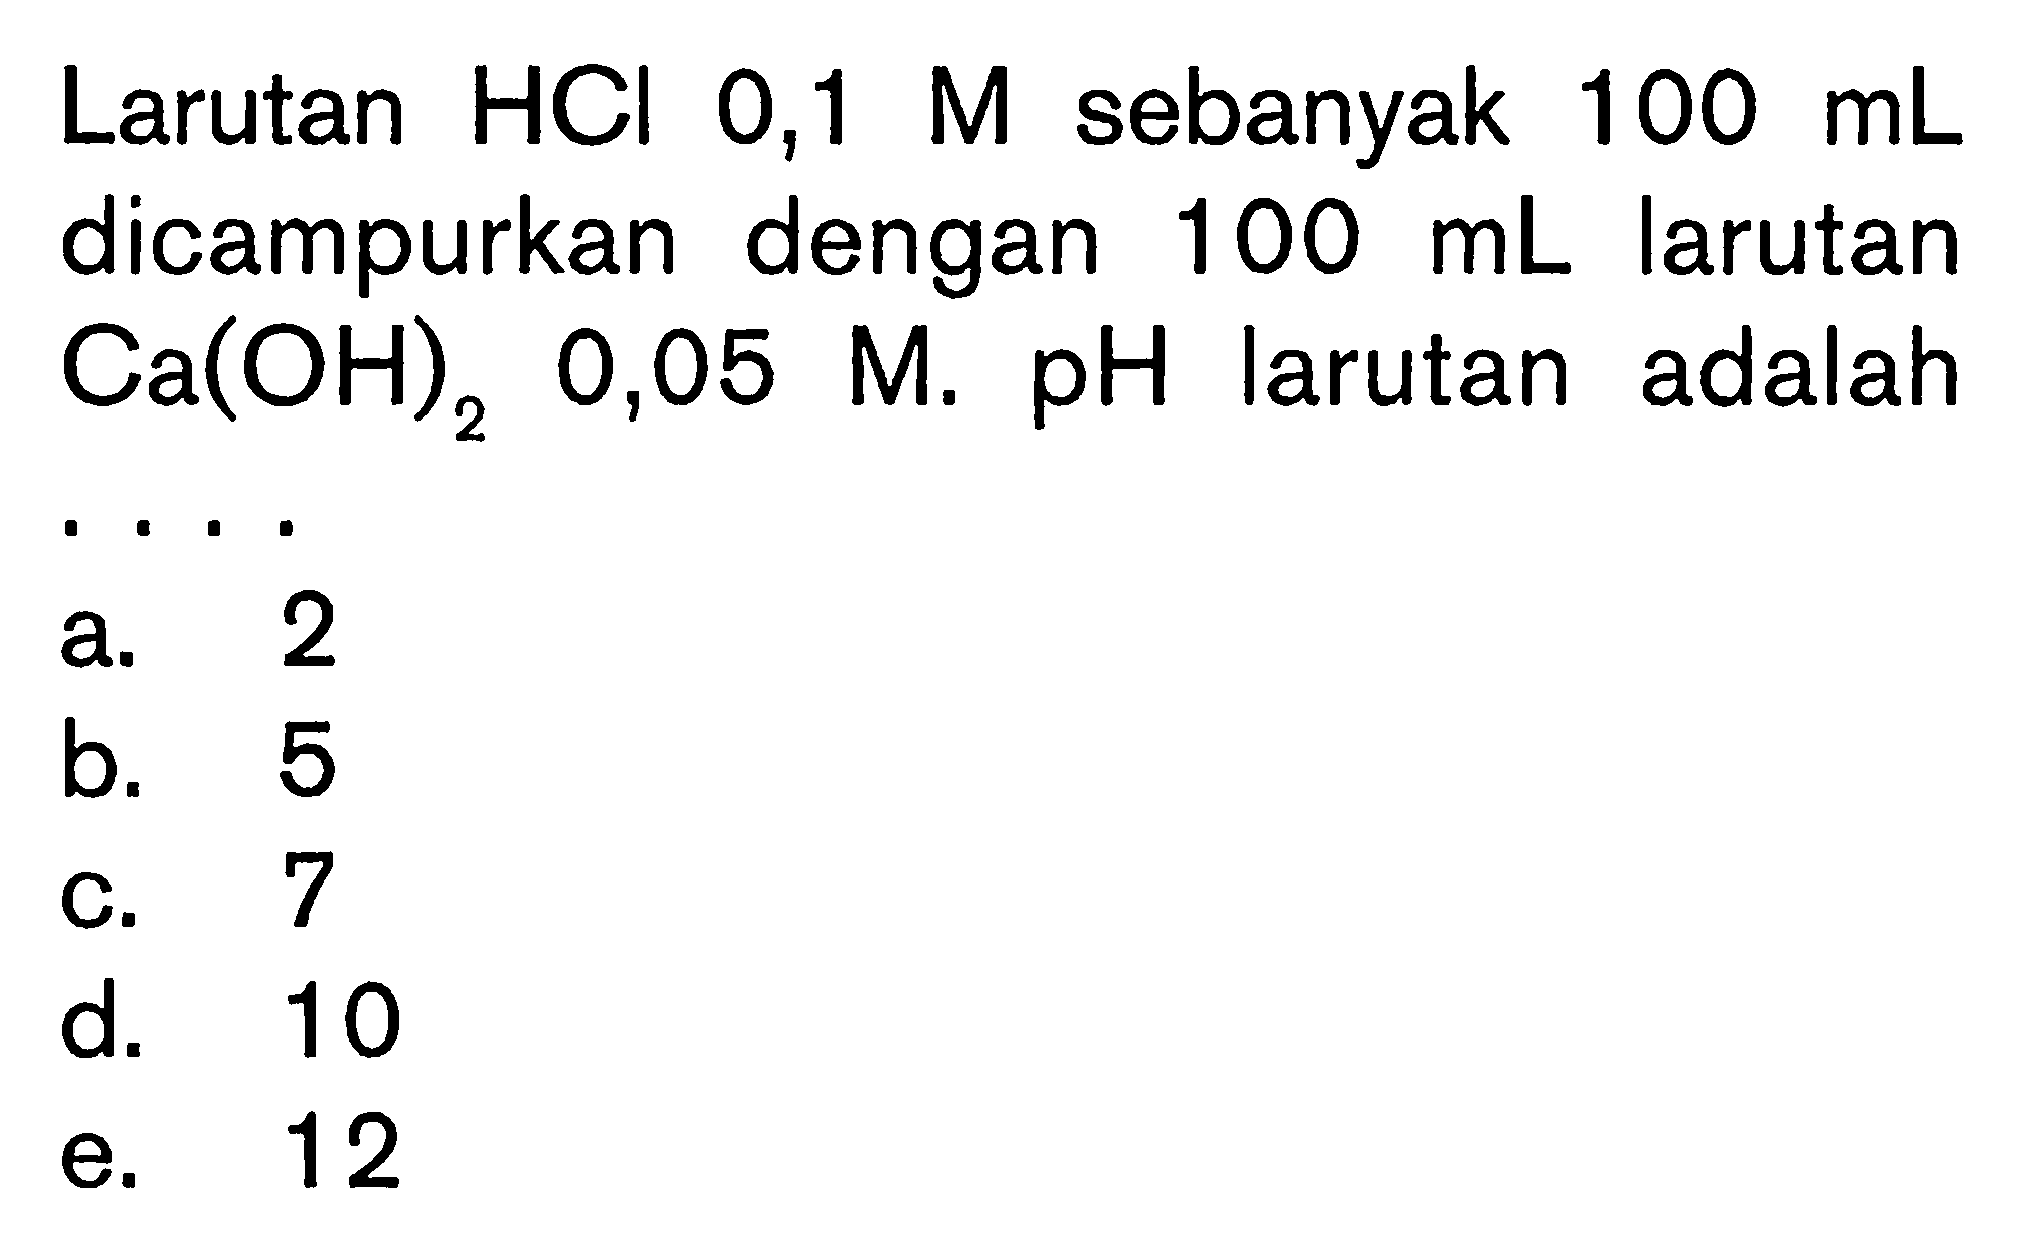 Larutan  HCl 0,1 M  sebanyak  100 mL  dicampurkan dengan  100 mL  larutan  Ca(OH)2  0,05  M . pH  larutan adalah ....